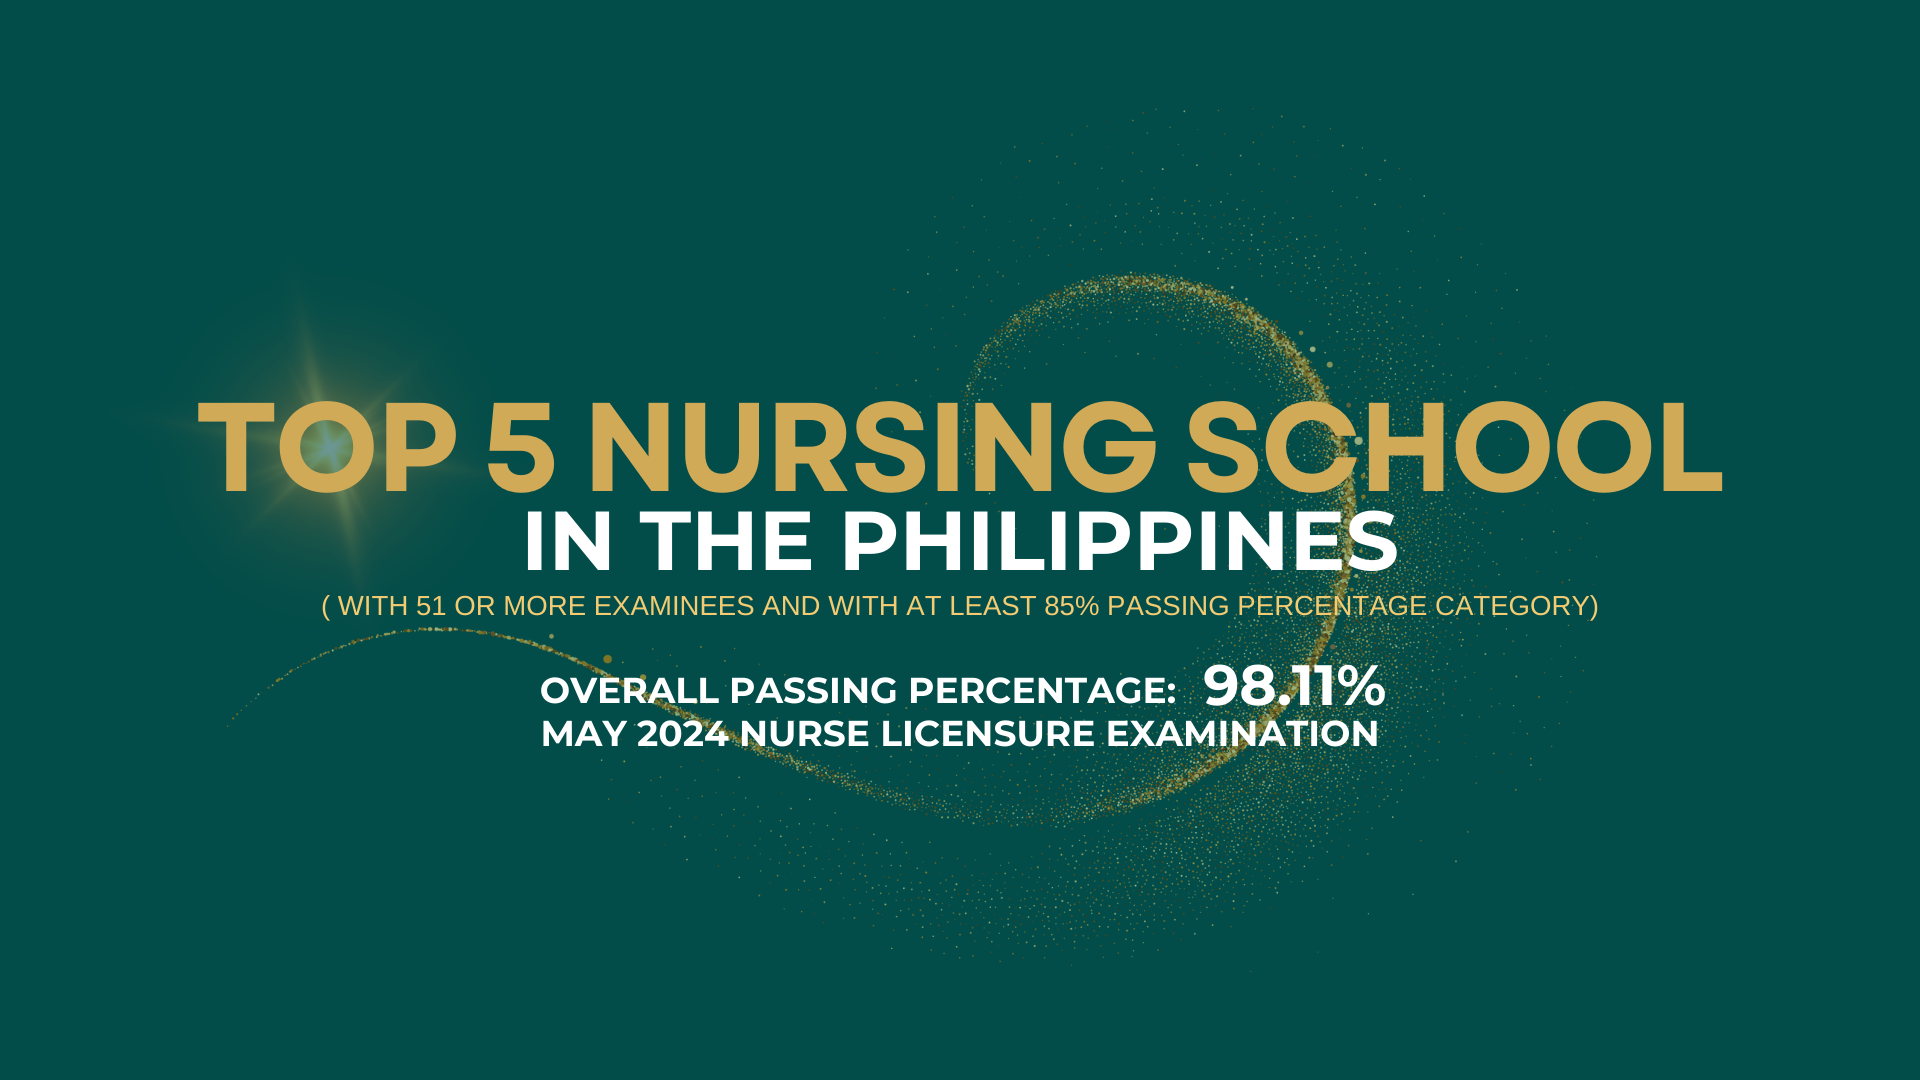 FEU-NRMF Ranked 5th Top Performing Nursing School in the Philippines